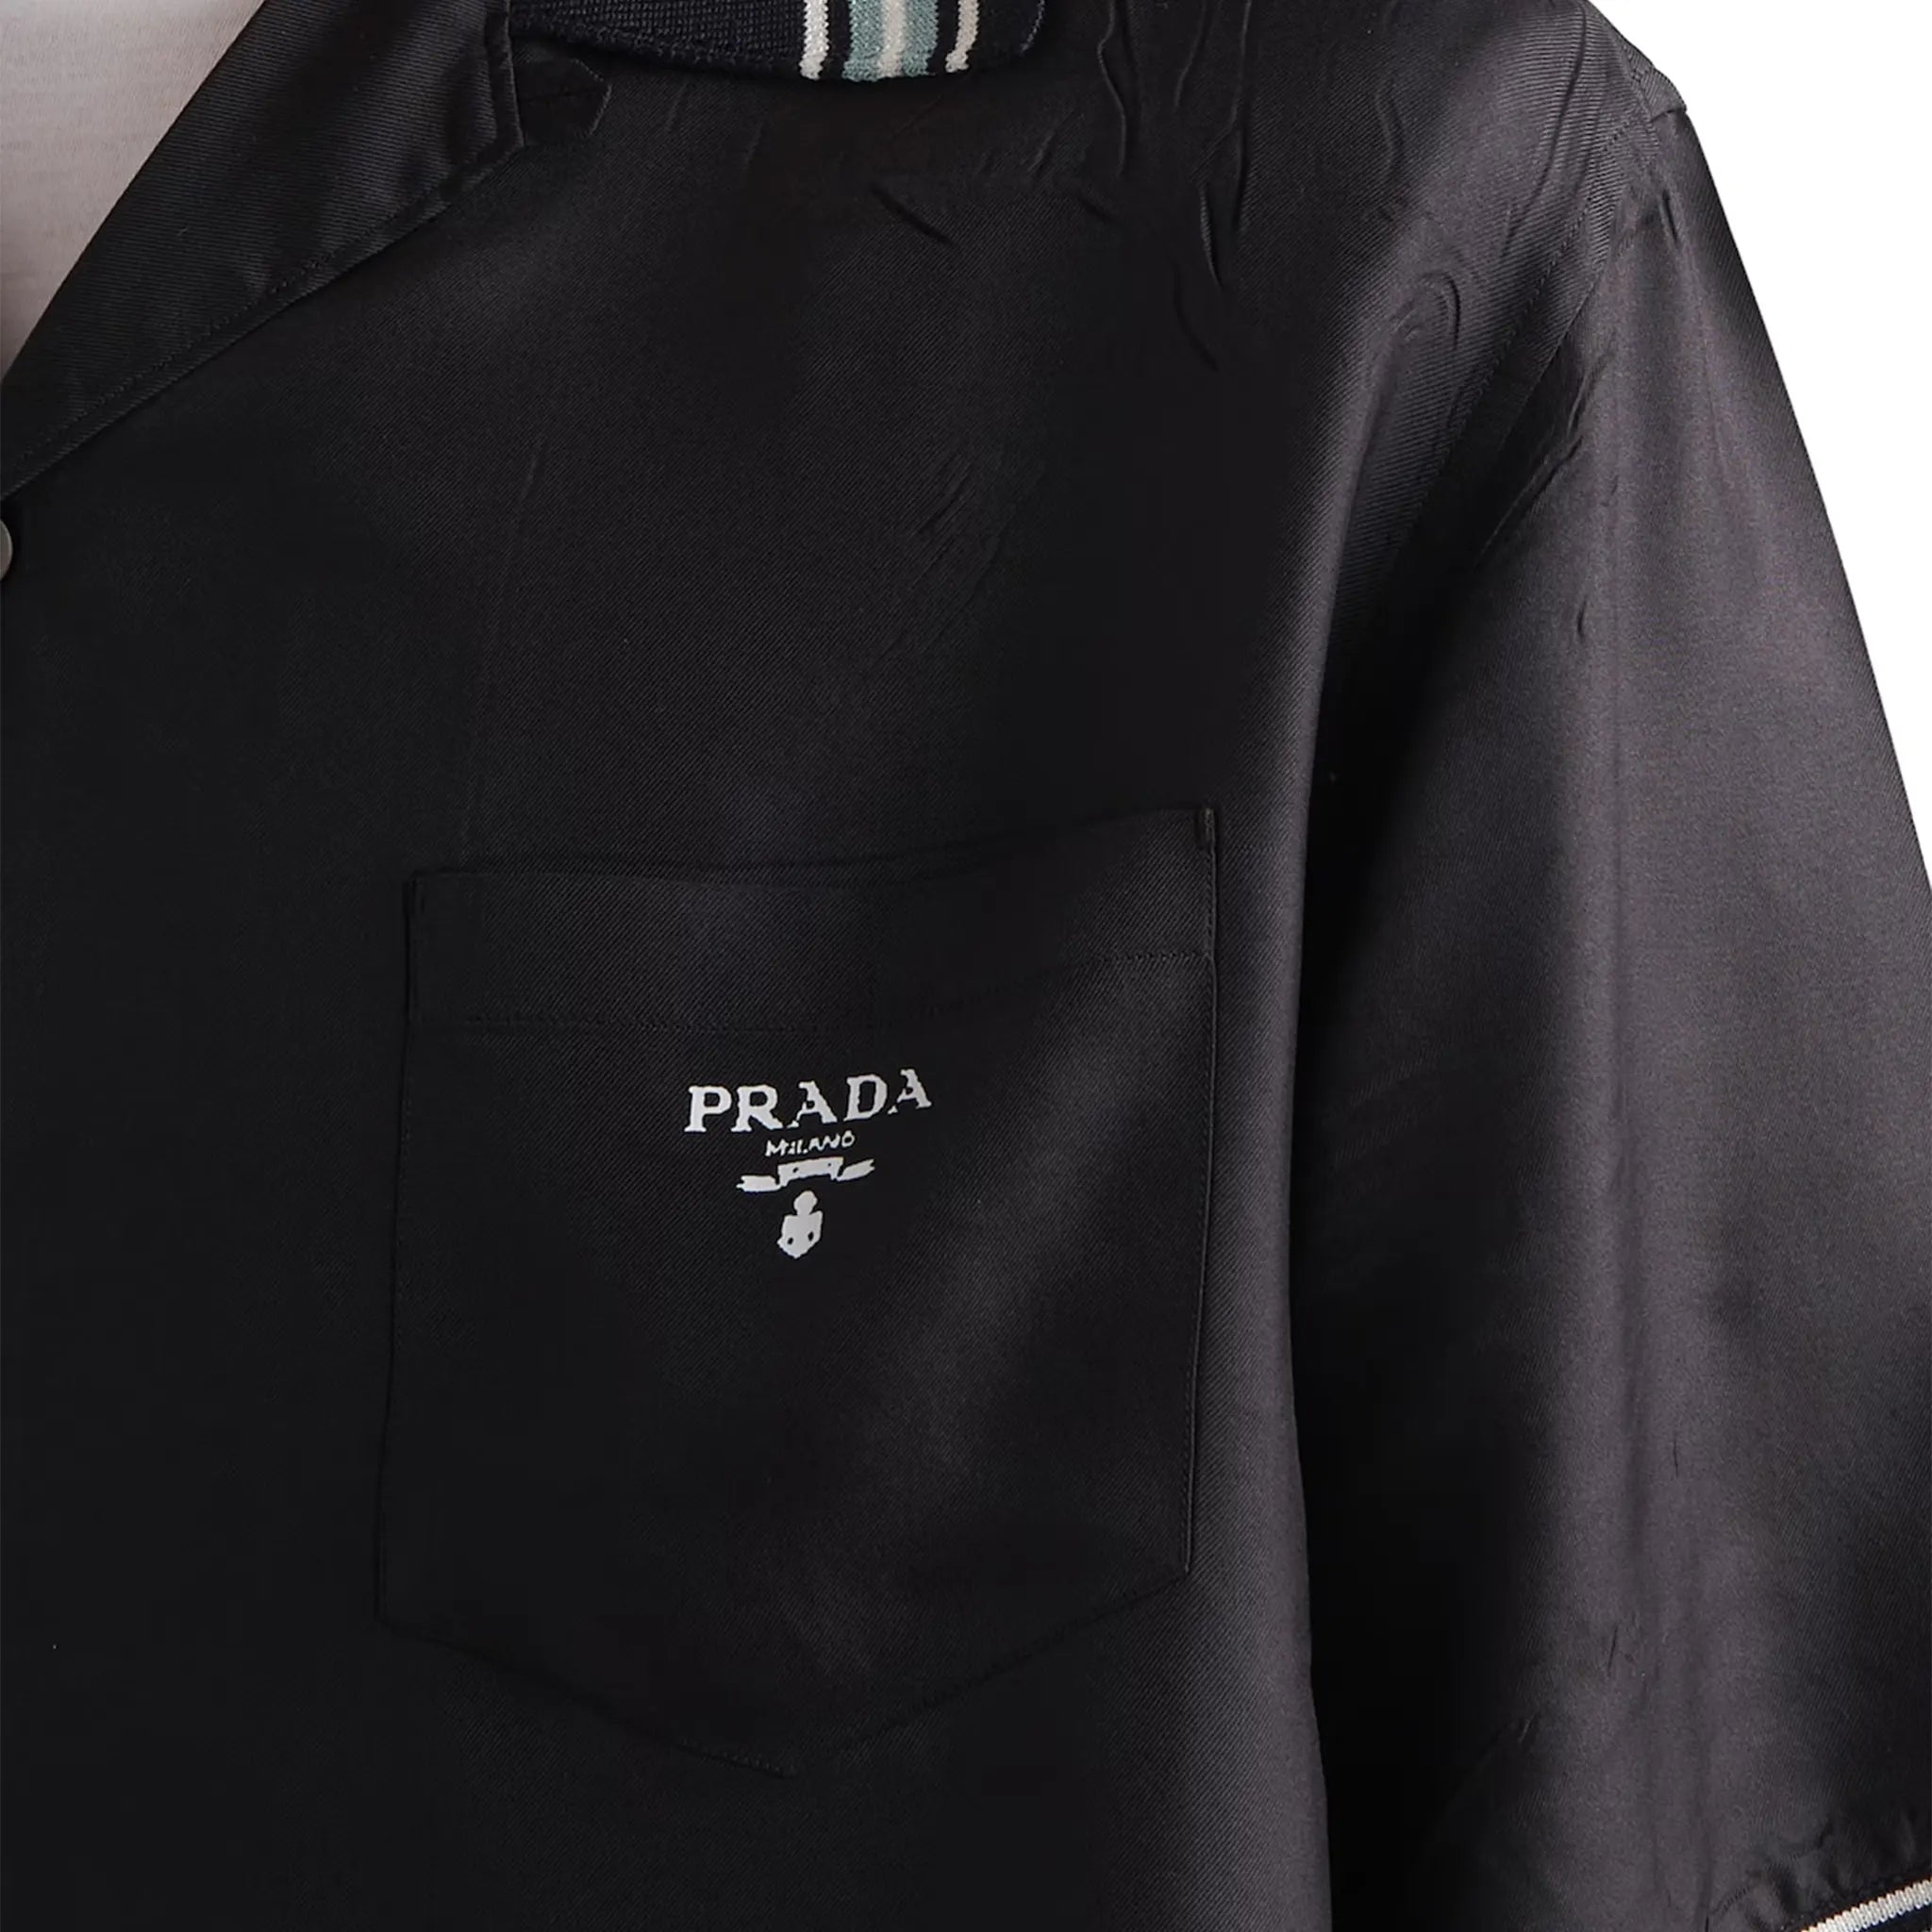 Detail view of Prada Silk Twill Short Sleeved Logo Black Shirt UCS501_1QWC_F0002_S_OOO